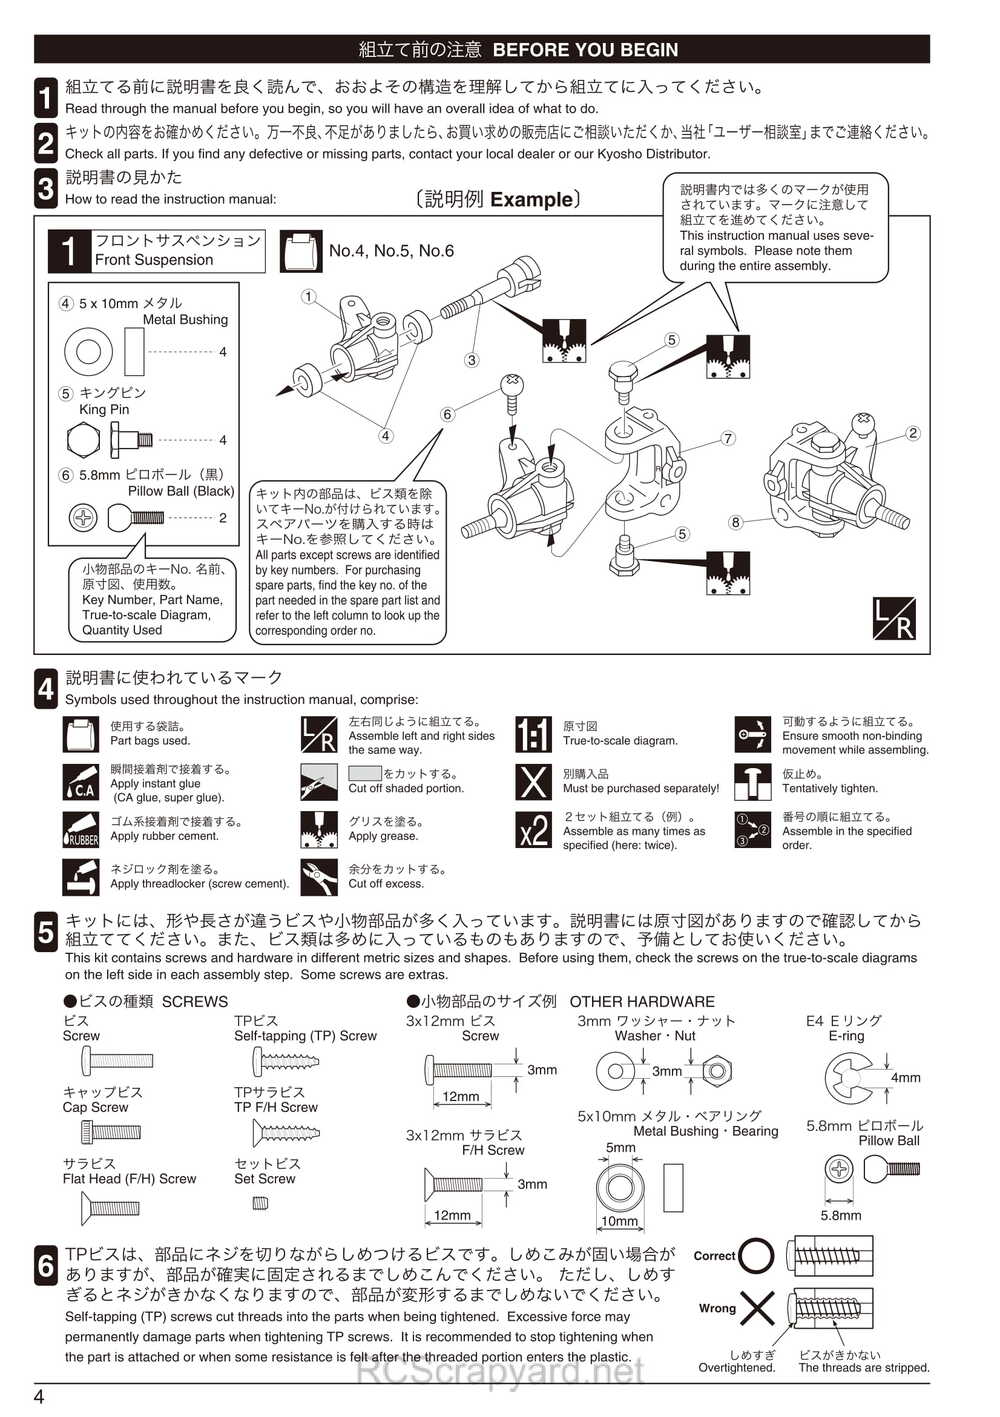 Kyosho - 31263 - V-One RRR Evo2 WC - Manual - Page 04